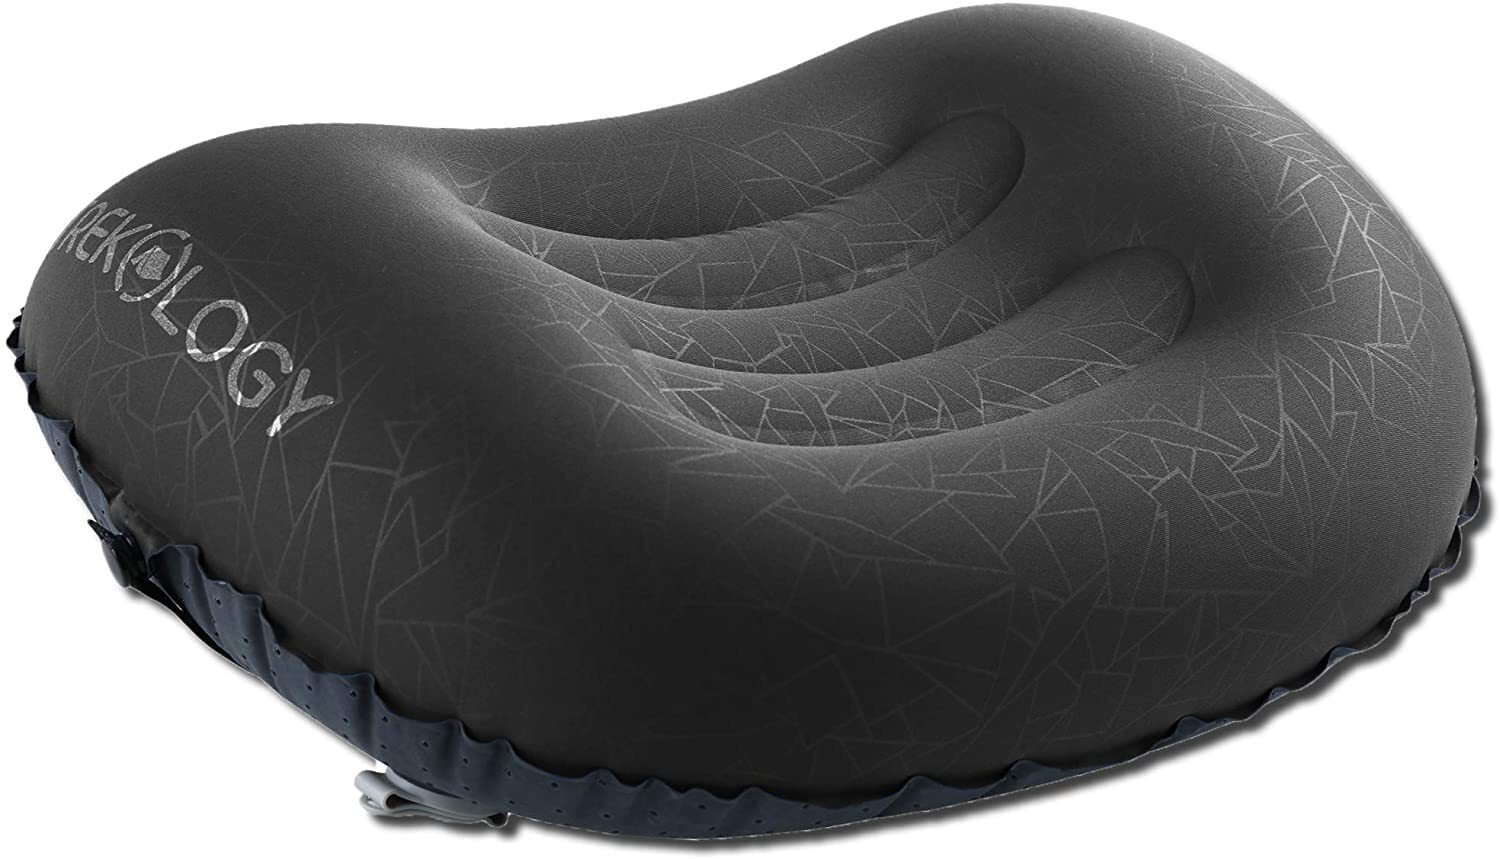 TREKOLOGY Inflatable Camping Pillow